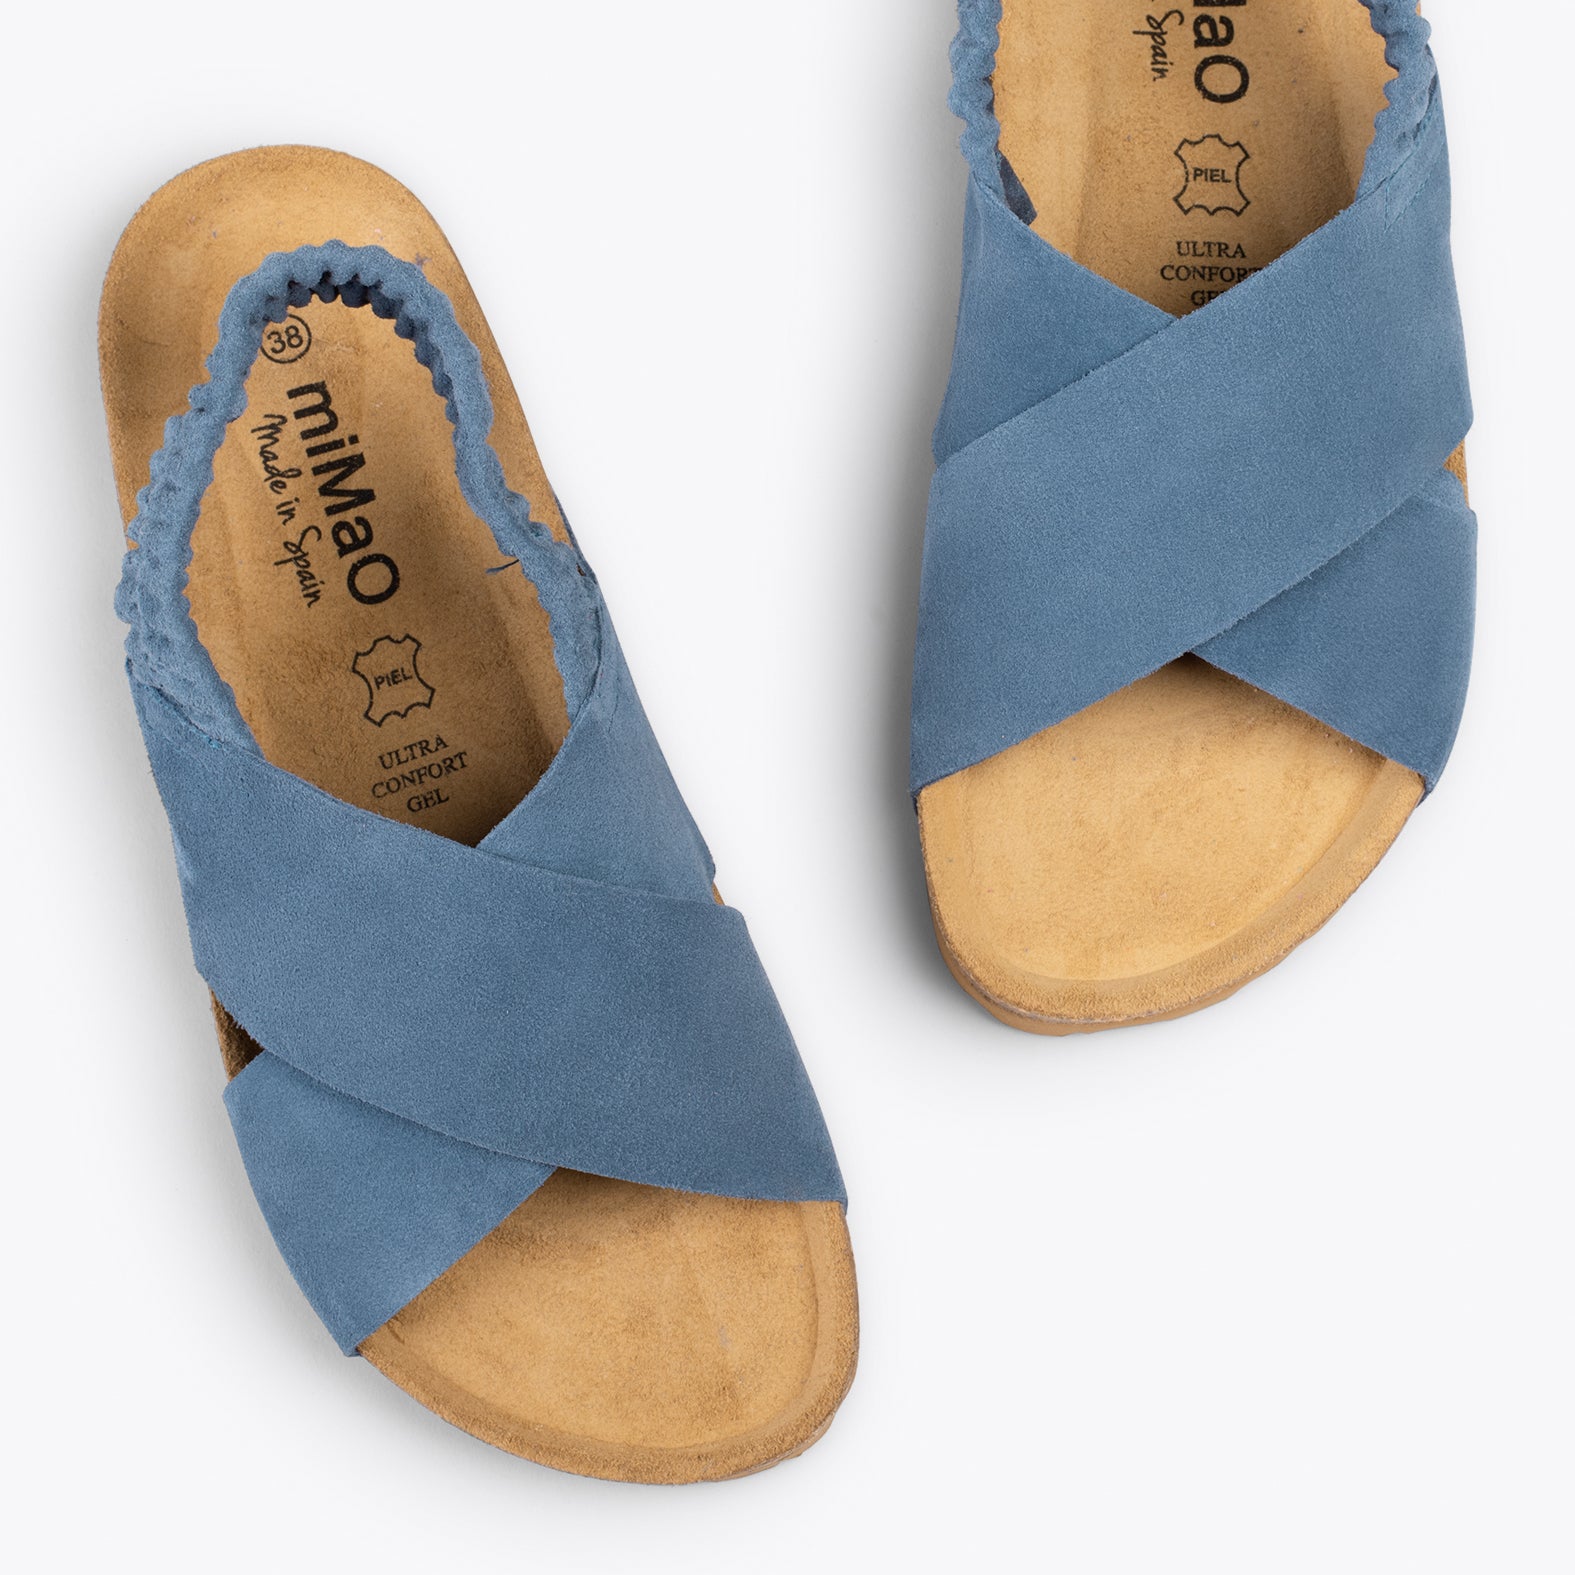 PALMERA – BLUE bio sandal with elastic band